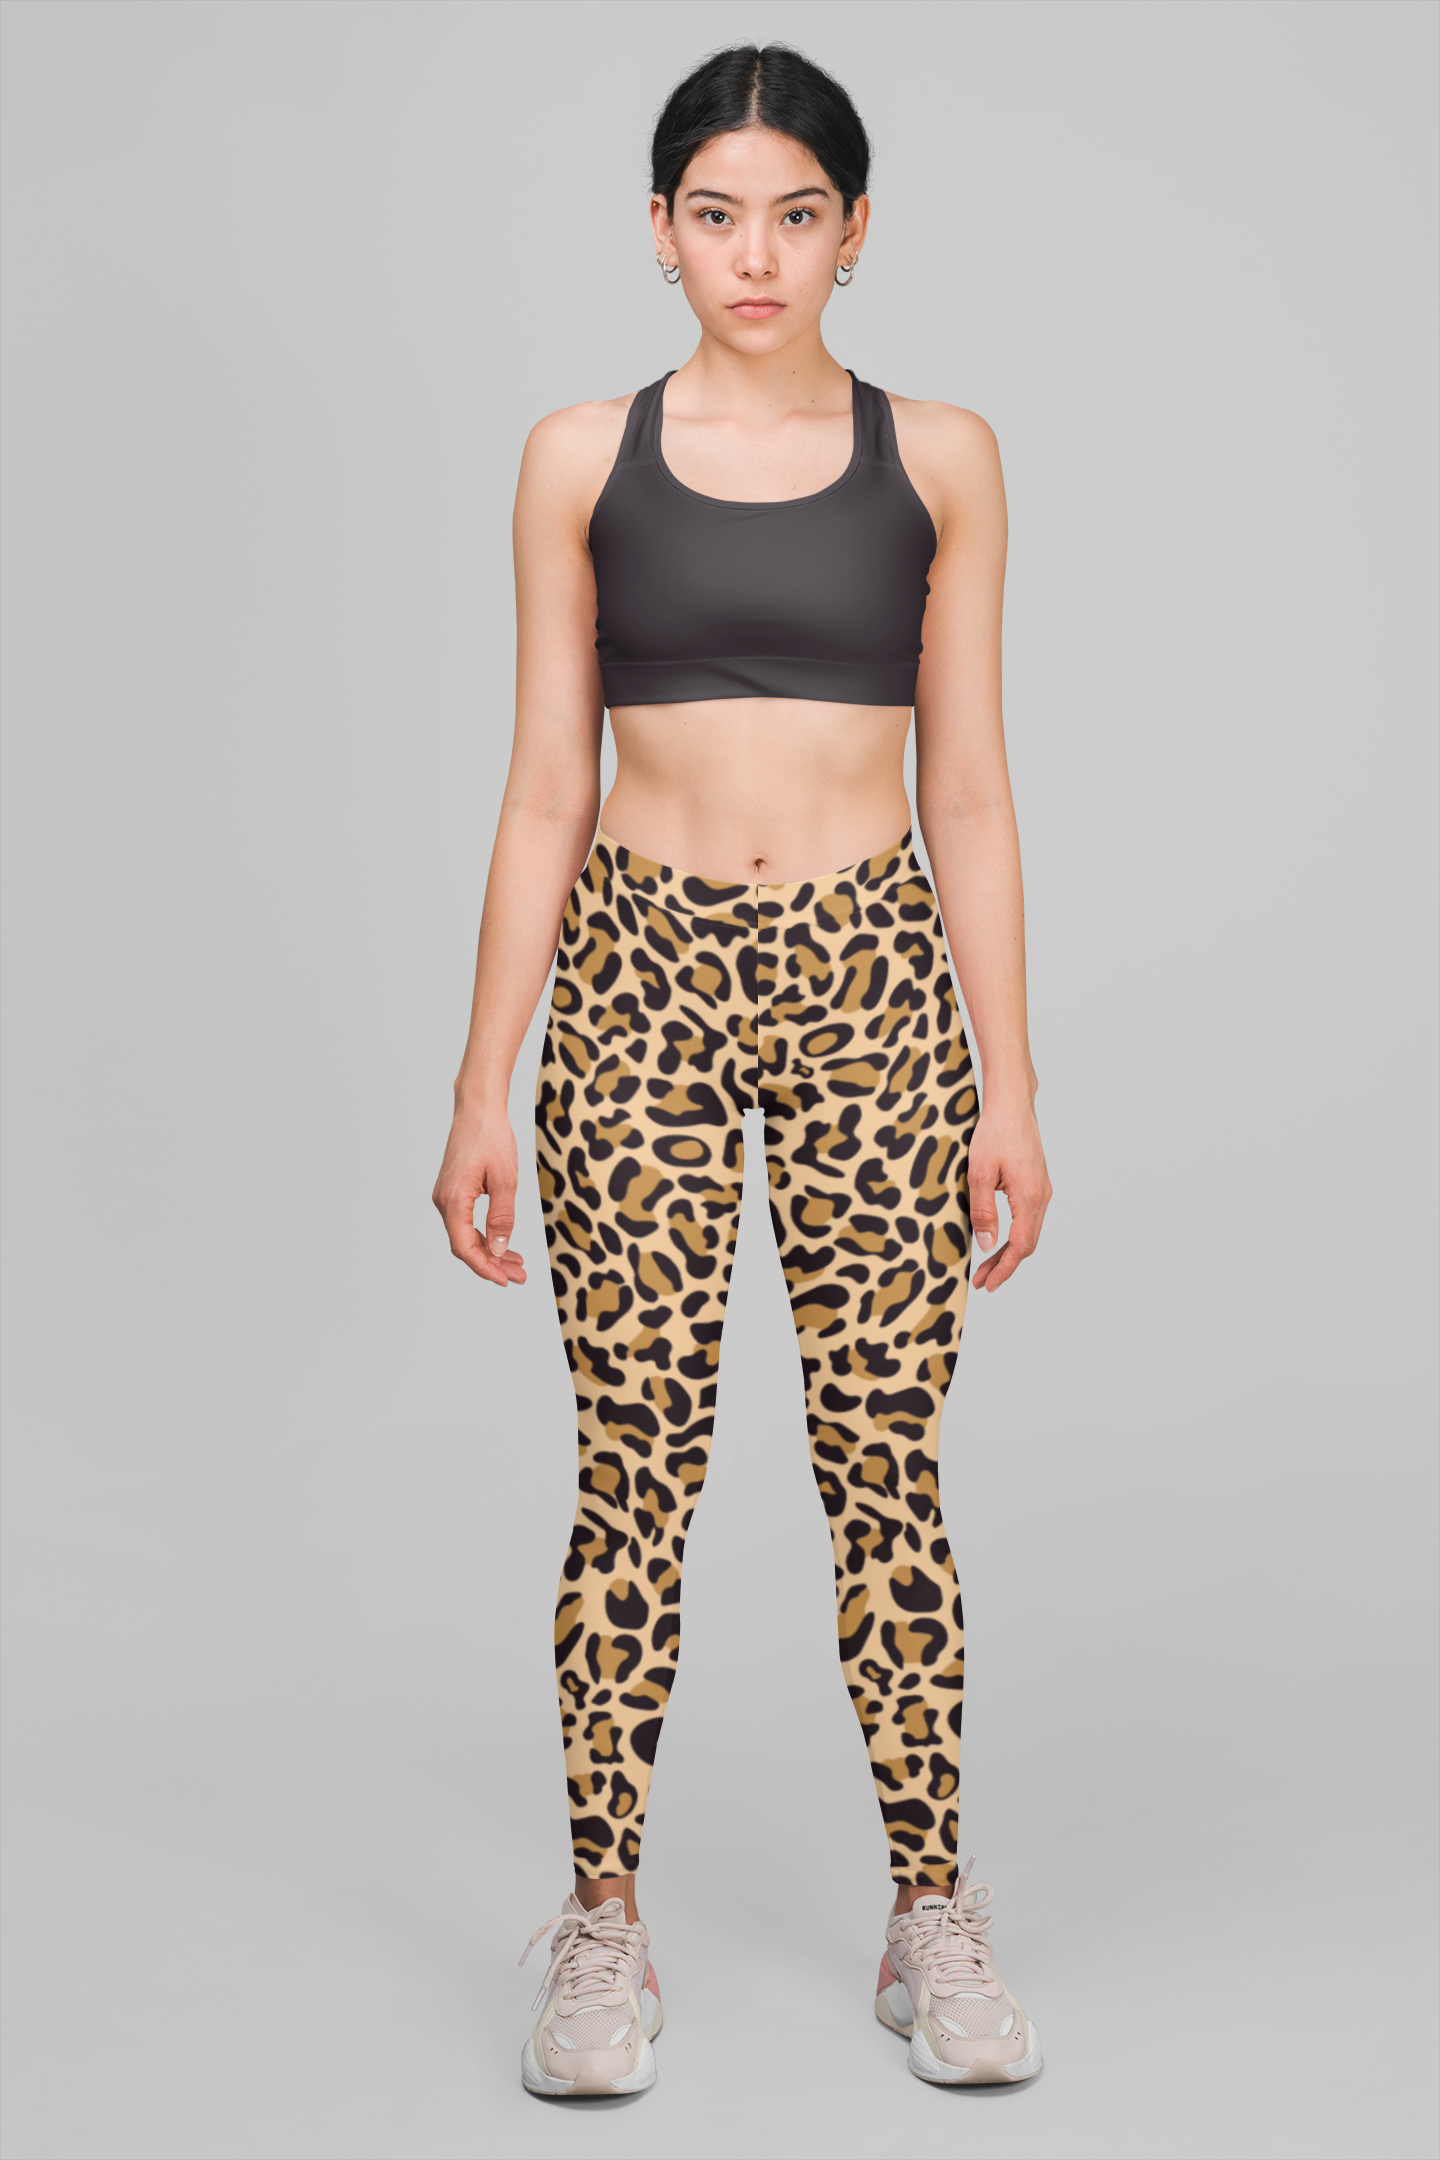 Carbon38 Animal Leopard Print High Waisted Full Length Compression Leggings  Med | Compression leggings women, Compression leggings, Leopard print